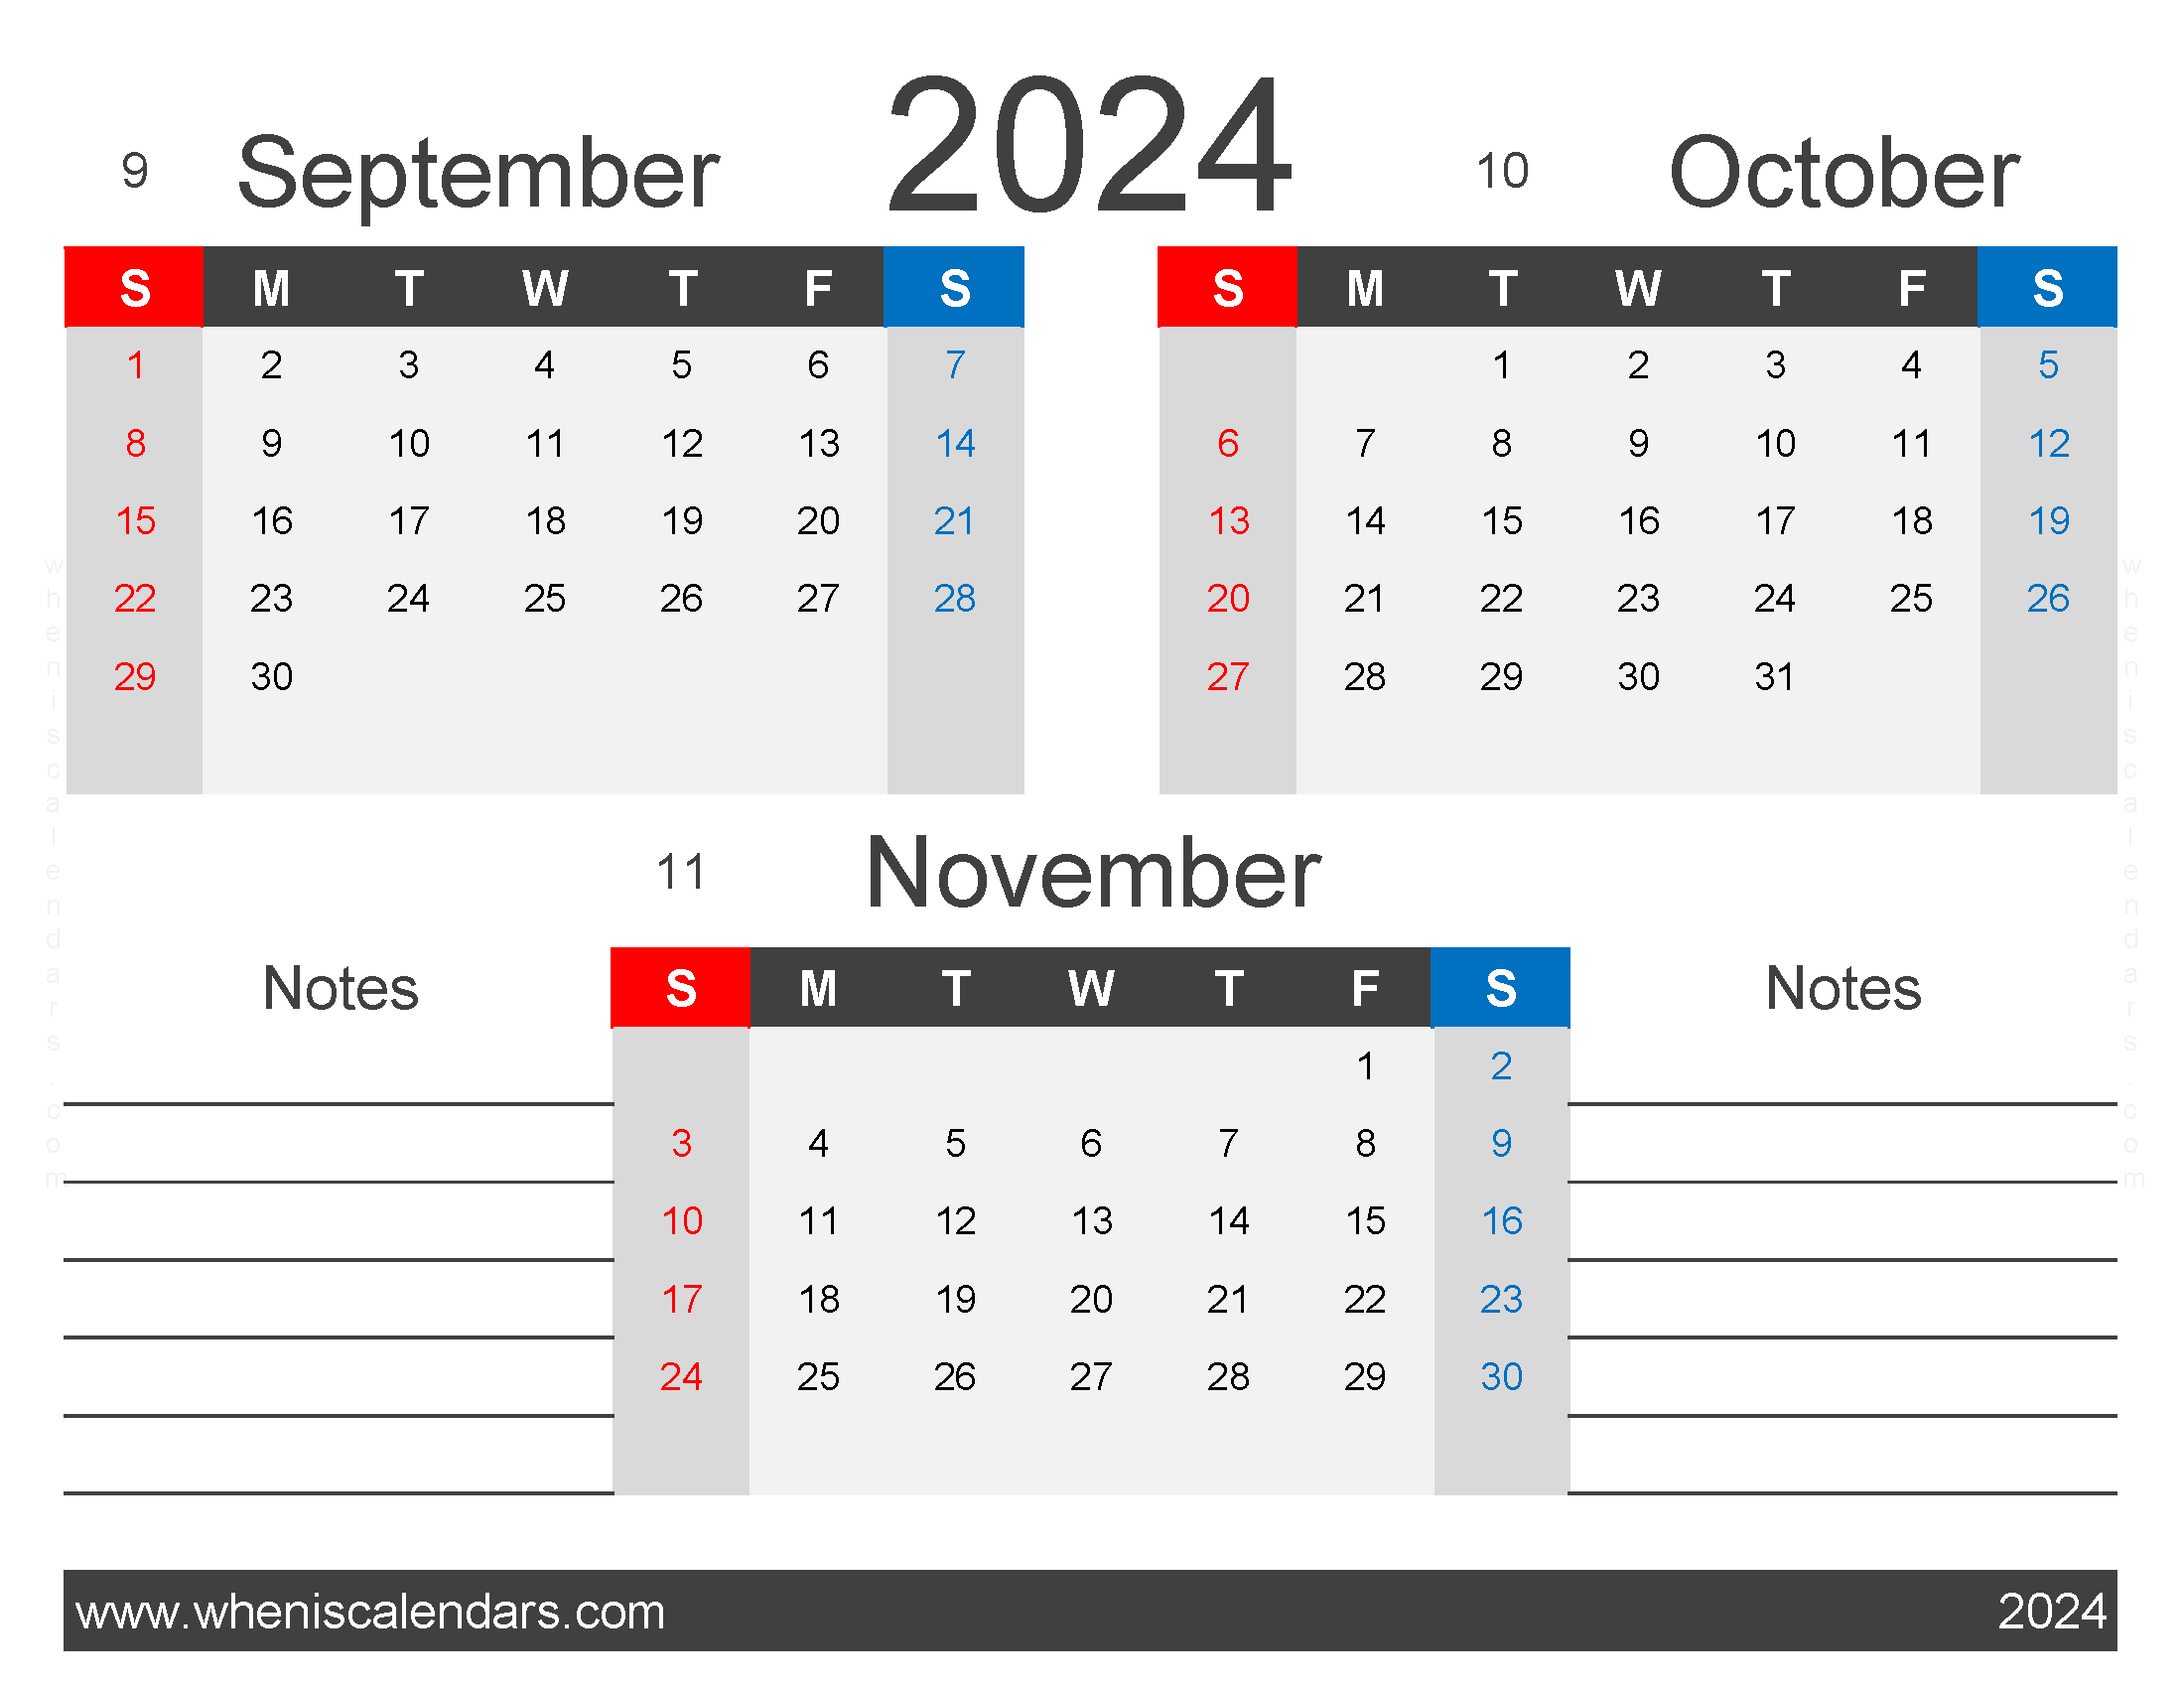 Download 2024 Calendar Sept Oct November SON424